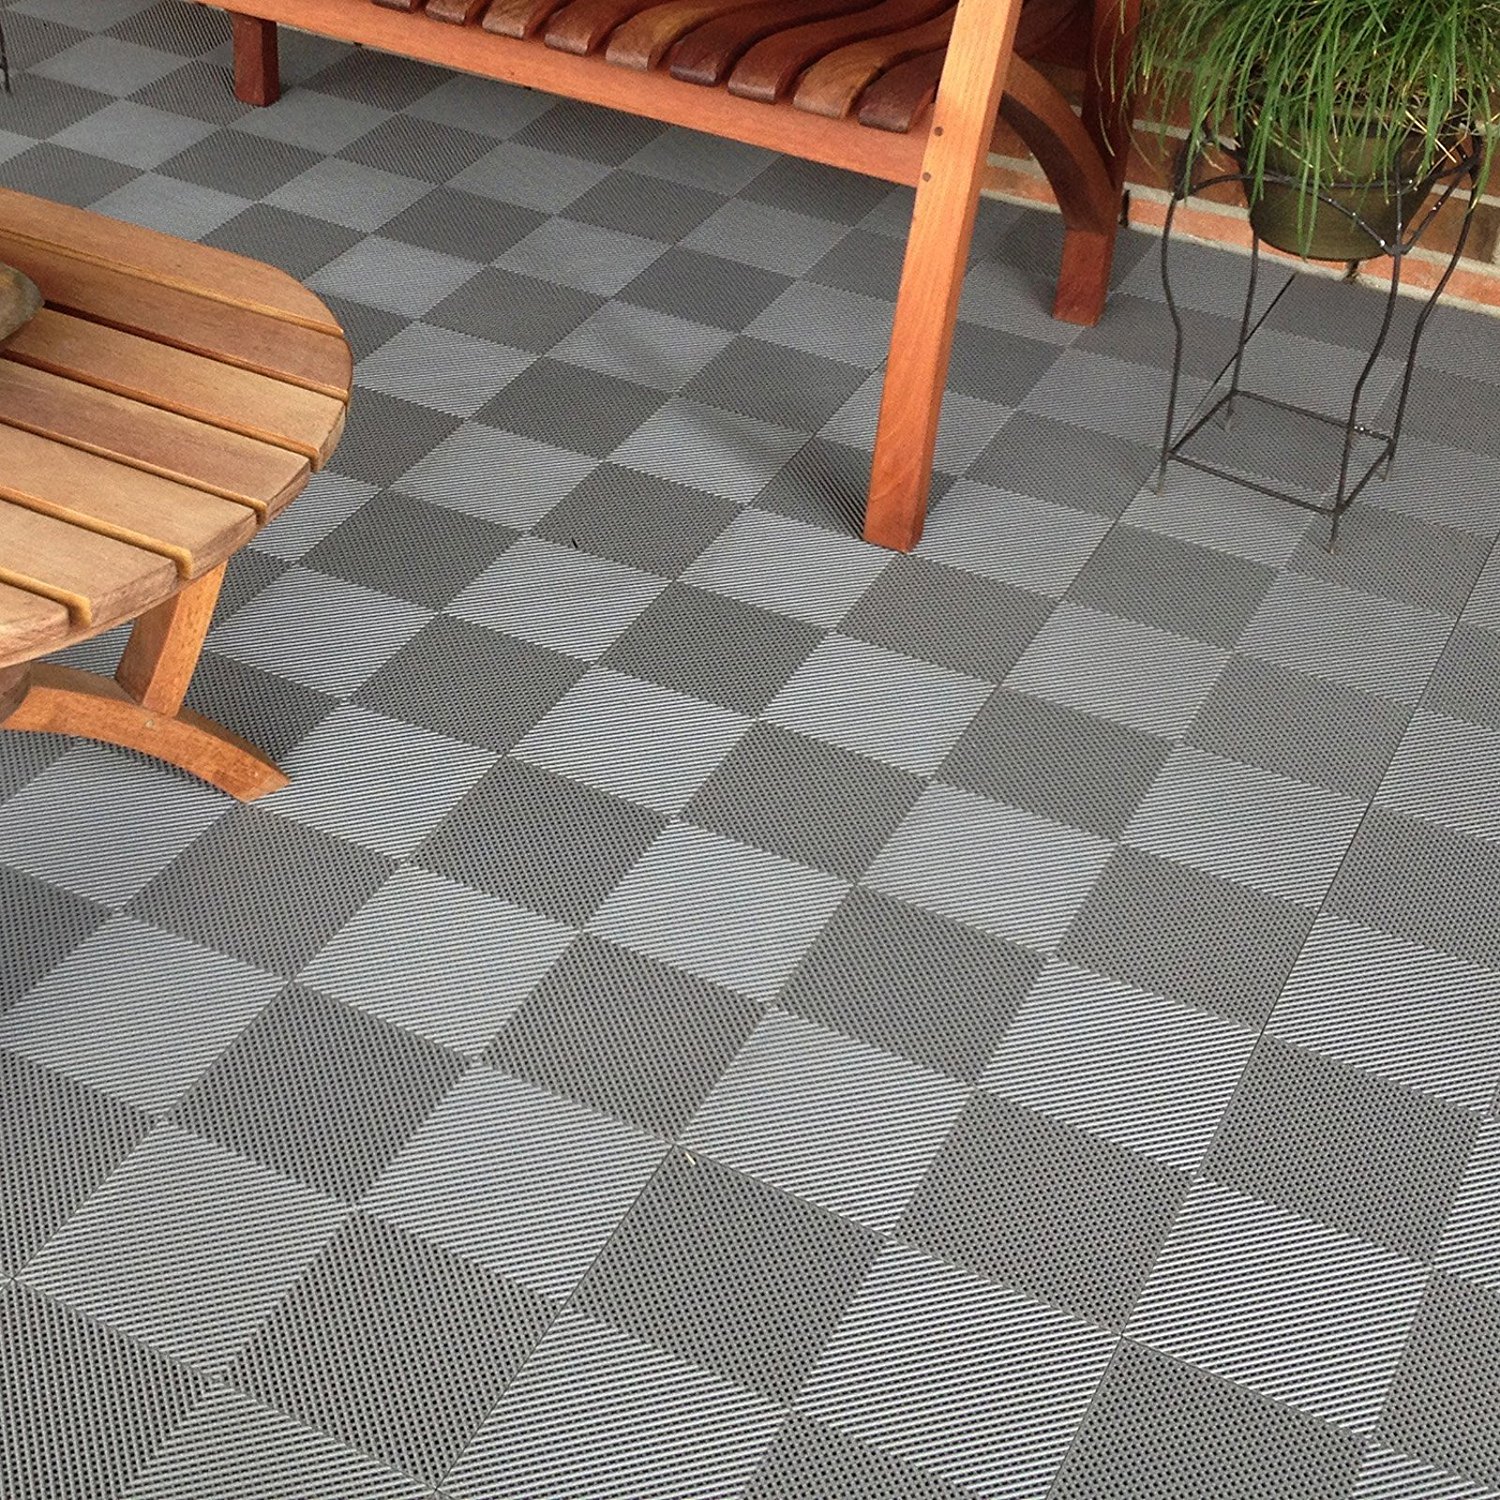 Outdoor Tiles The Tile Home Guide